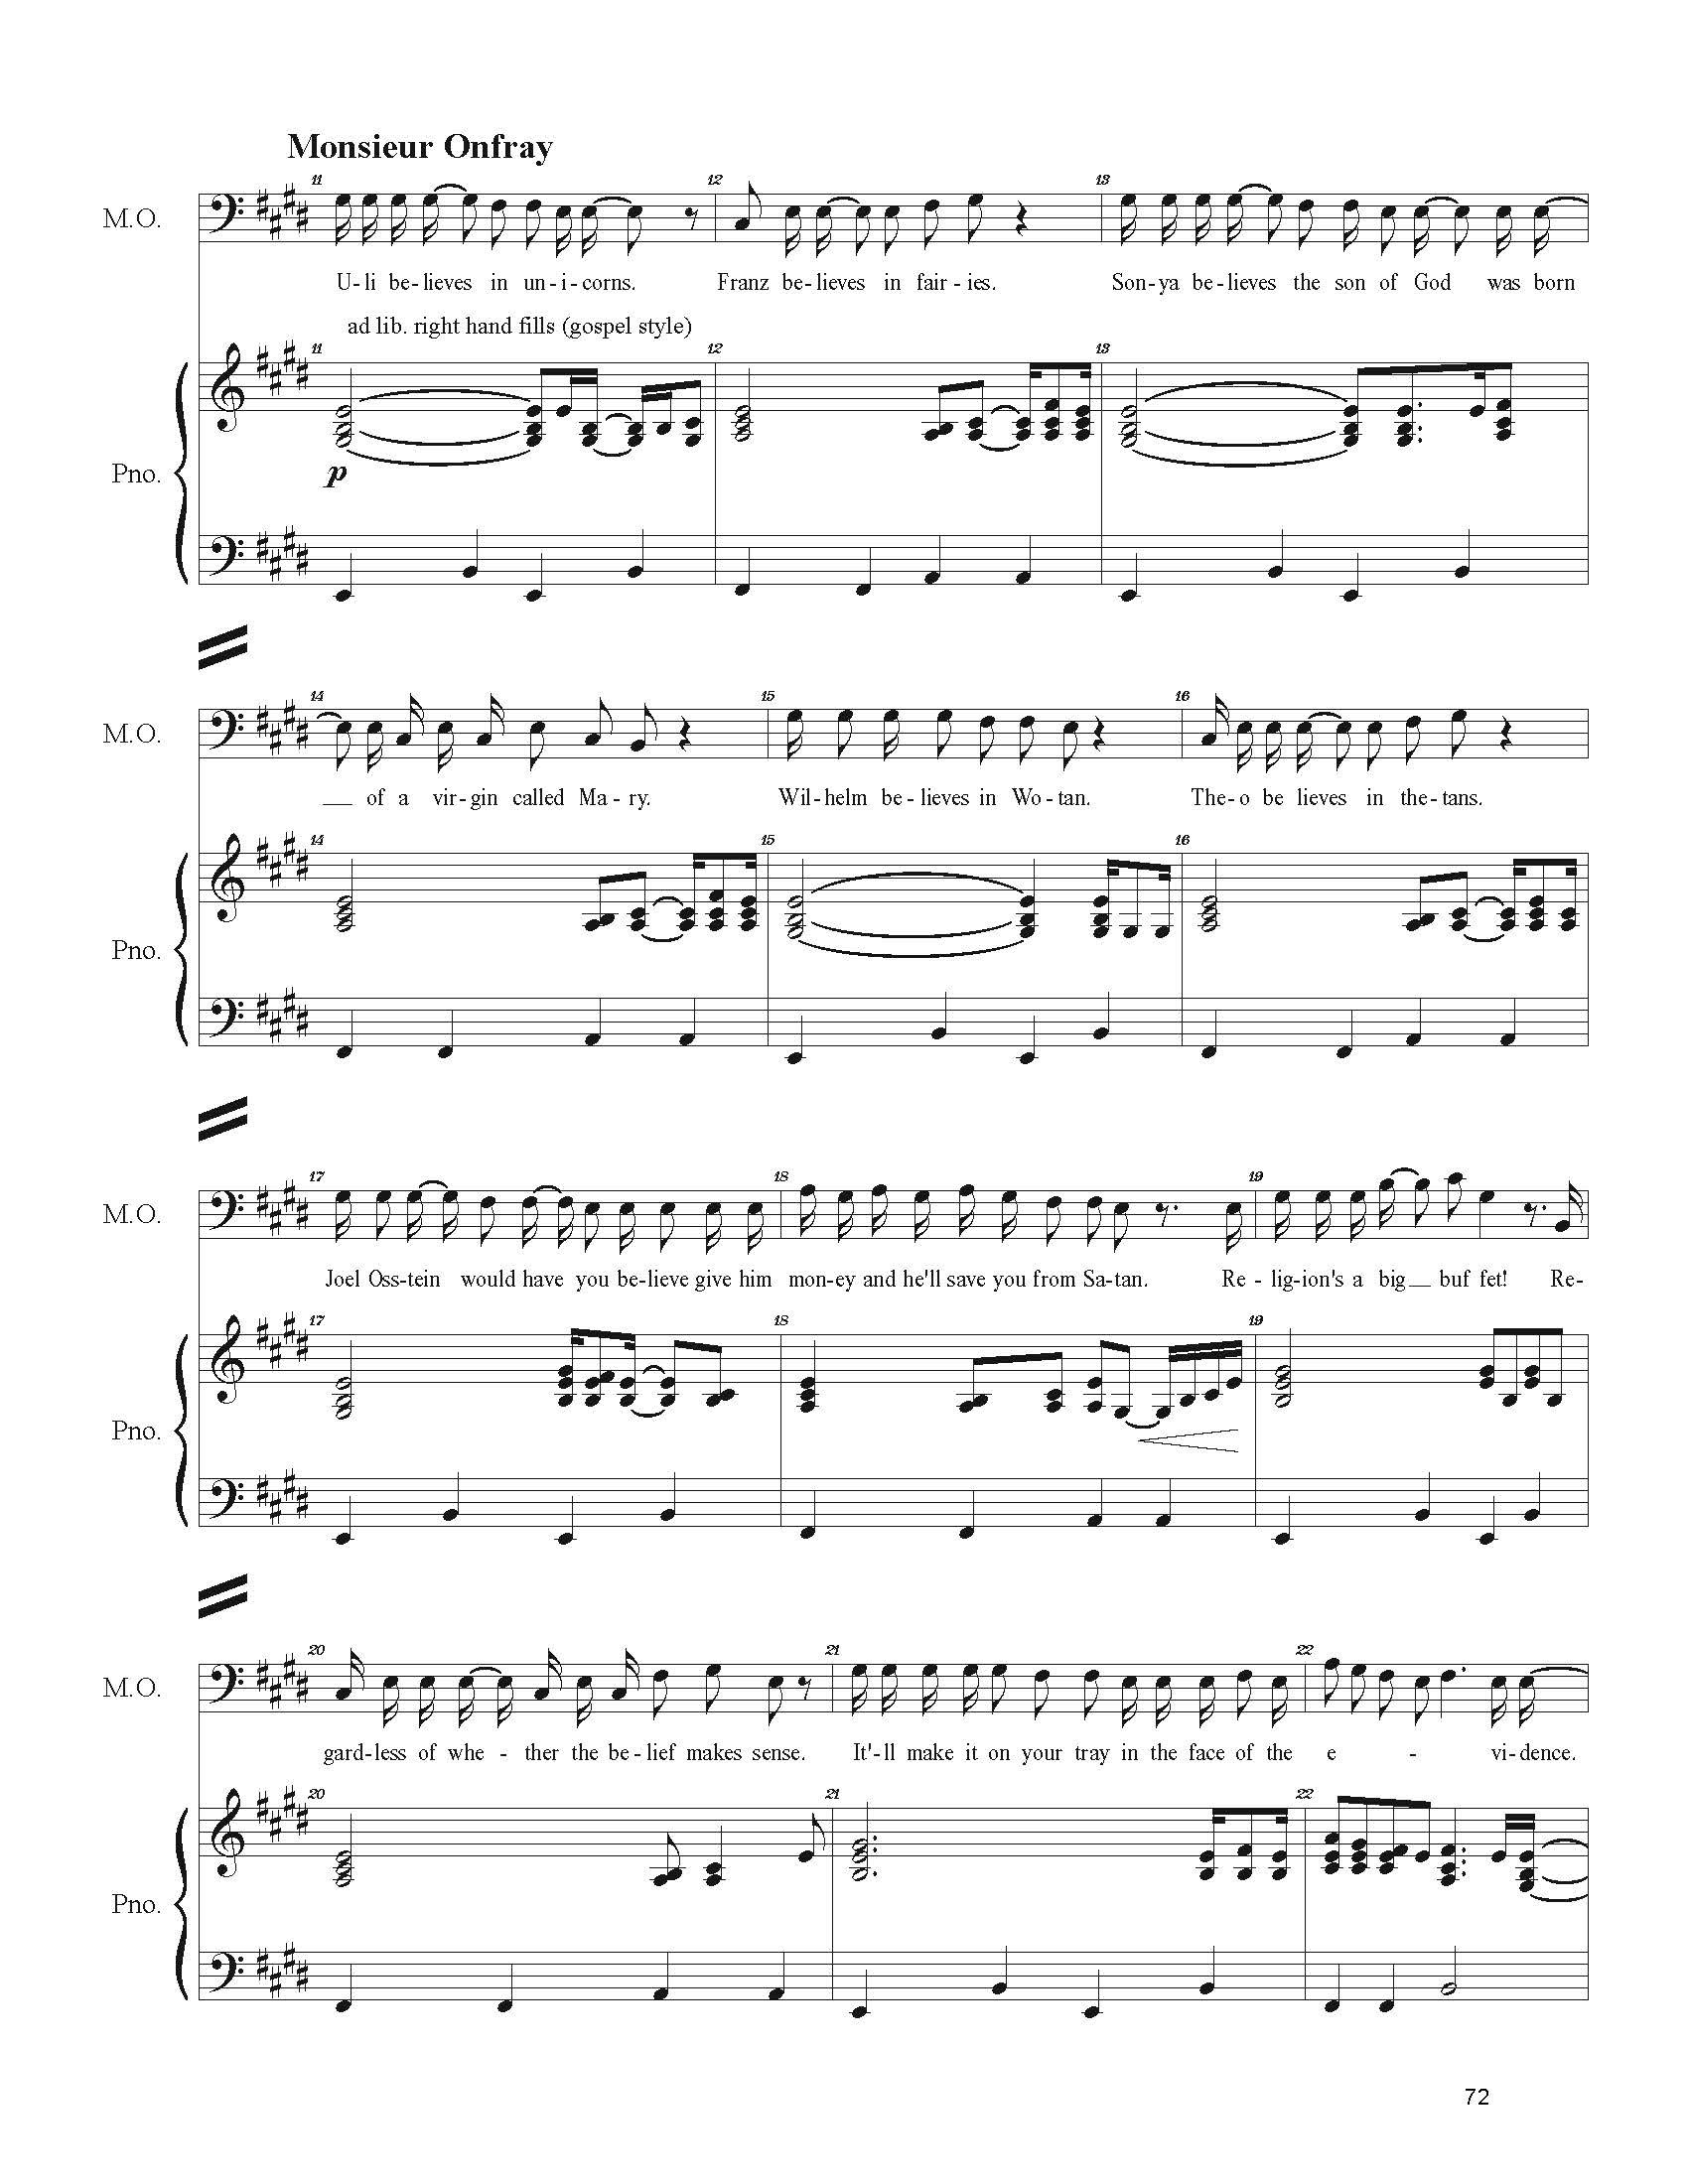 FULL PIANO VOCAL SCORE DRAFT 1 - Score_Page_072.jpg